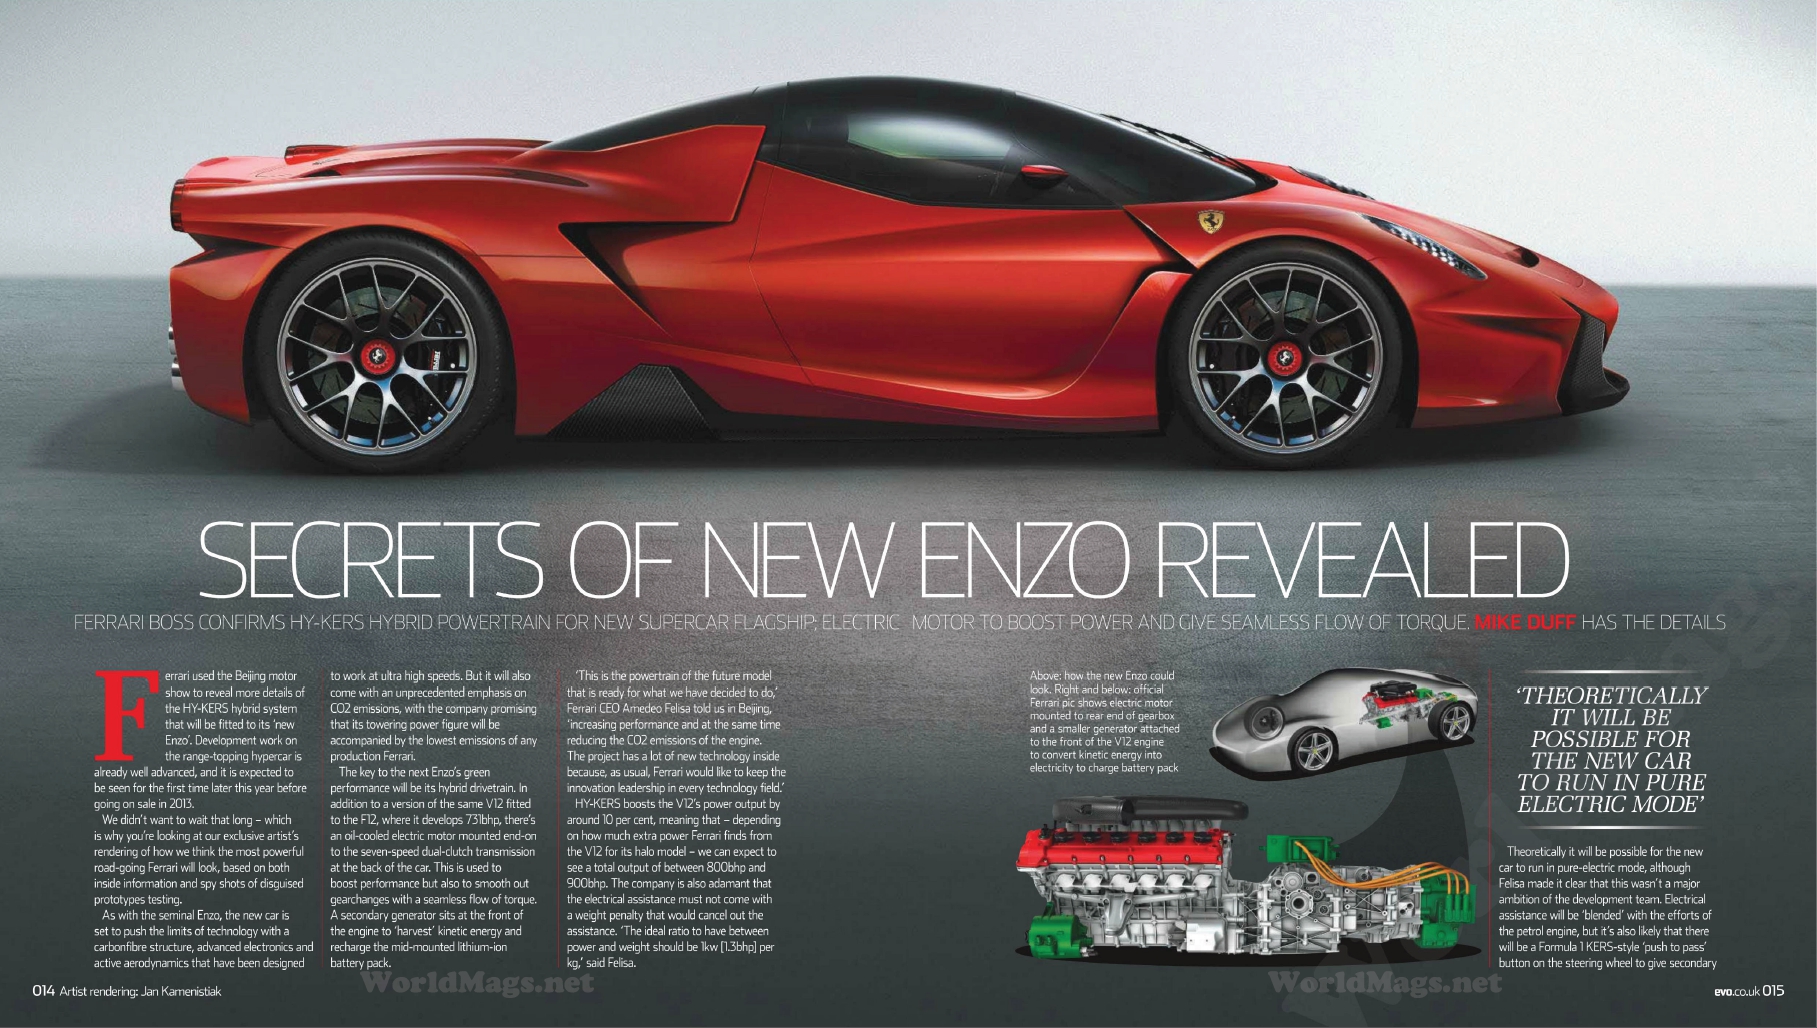 Revolutionair ontwerp: Ferrari's nieuwste supercar